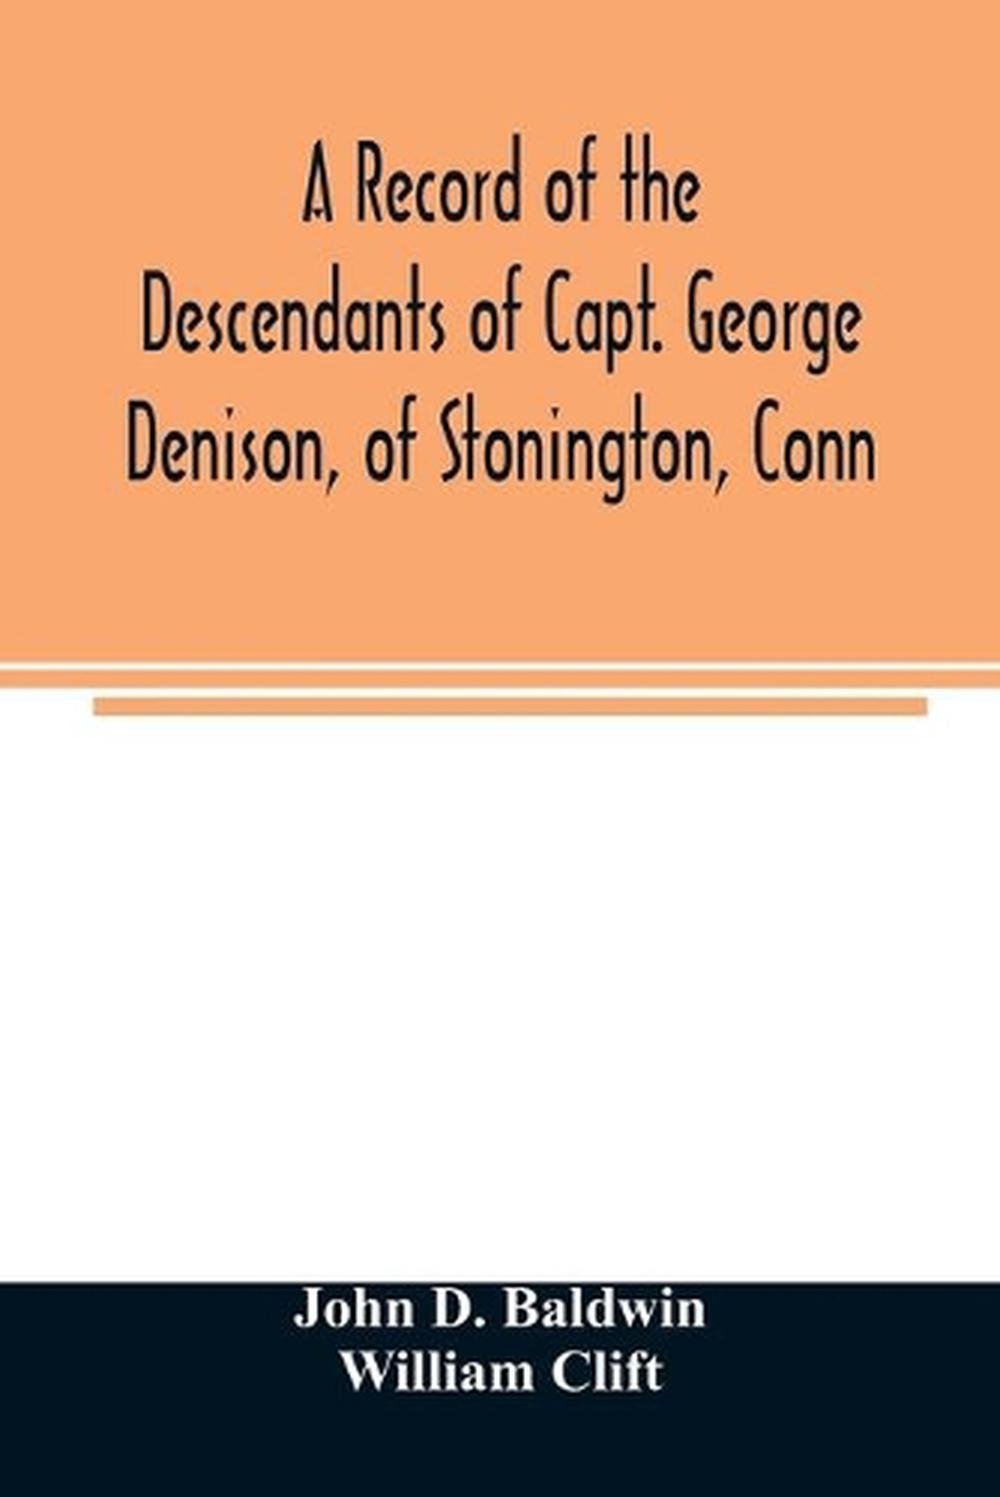 captain george denison